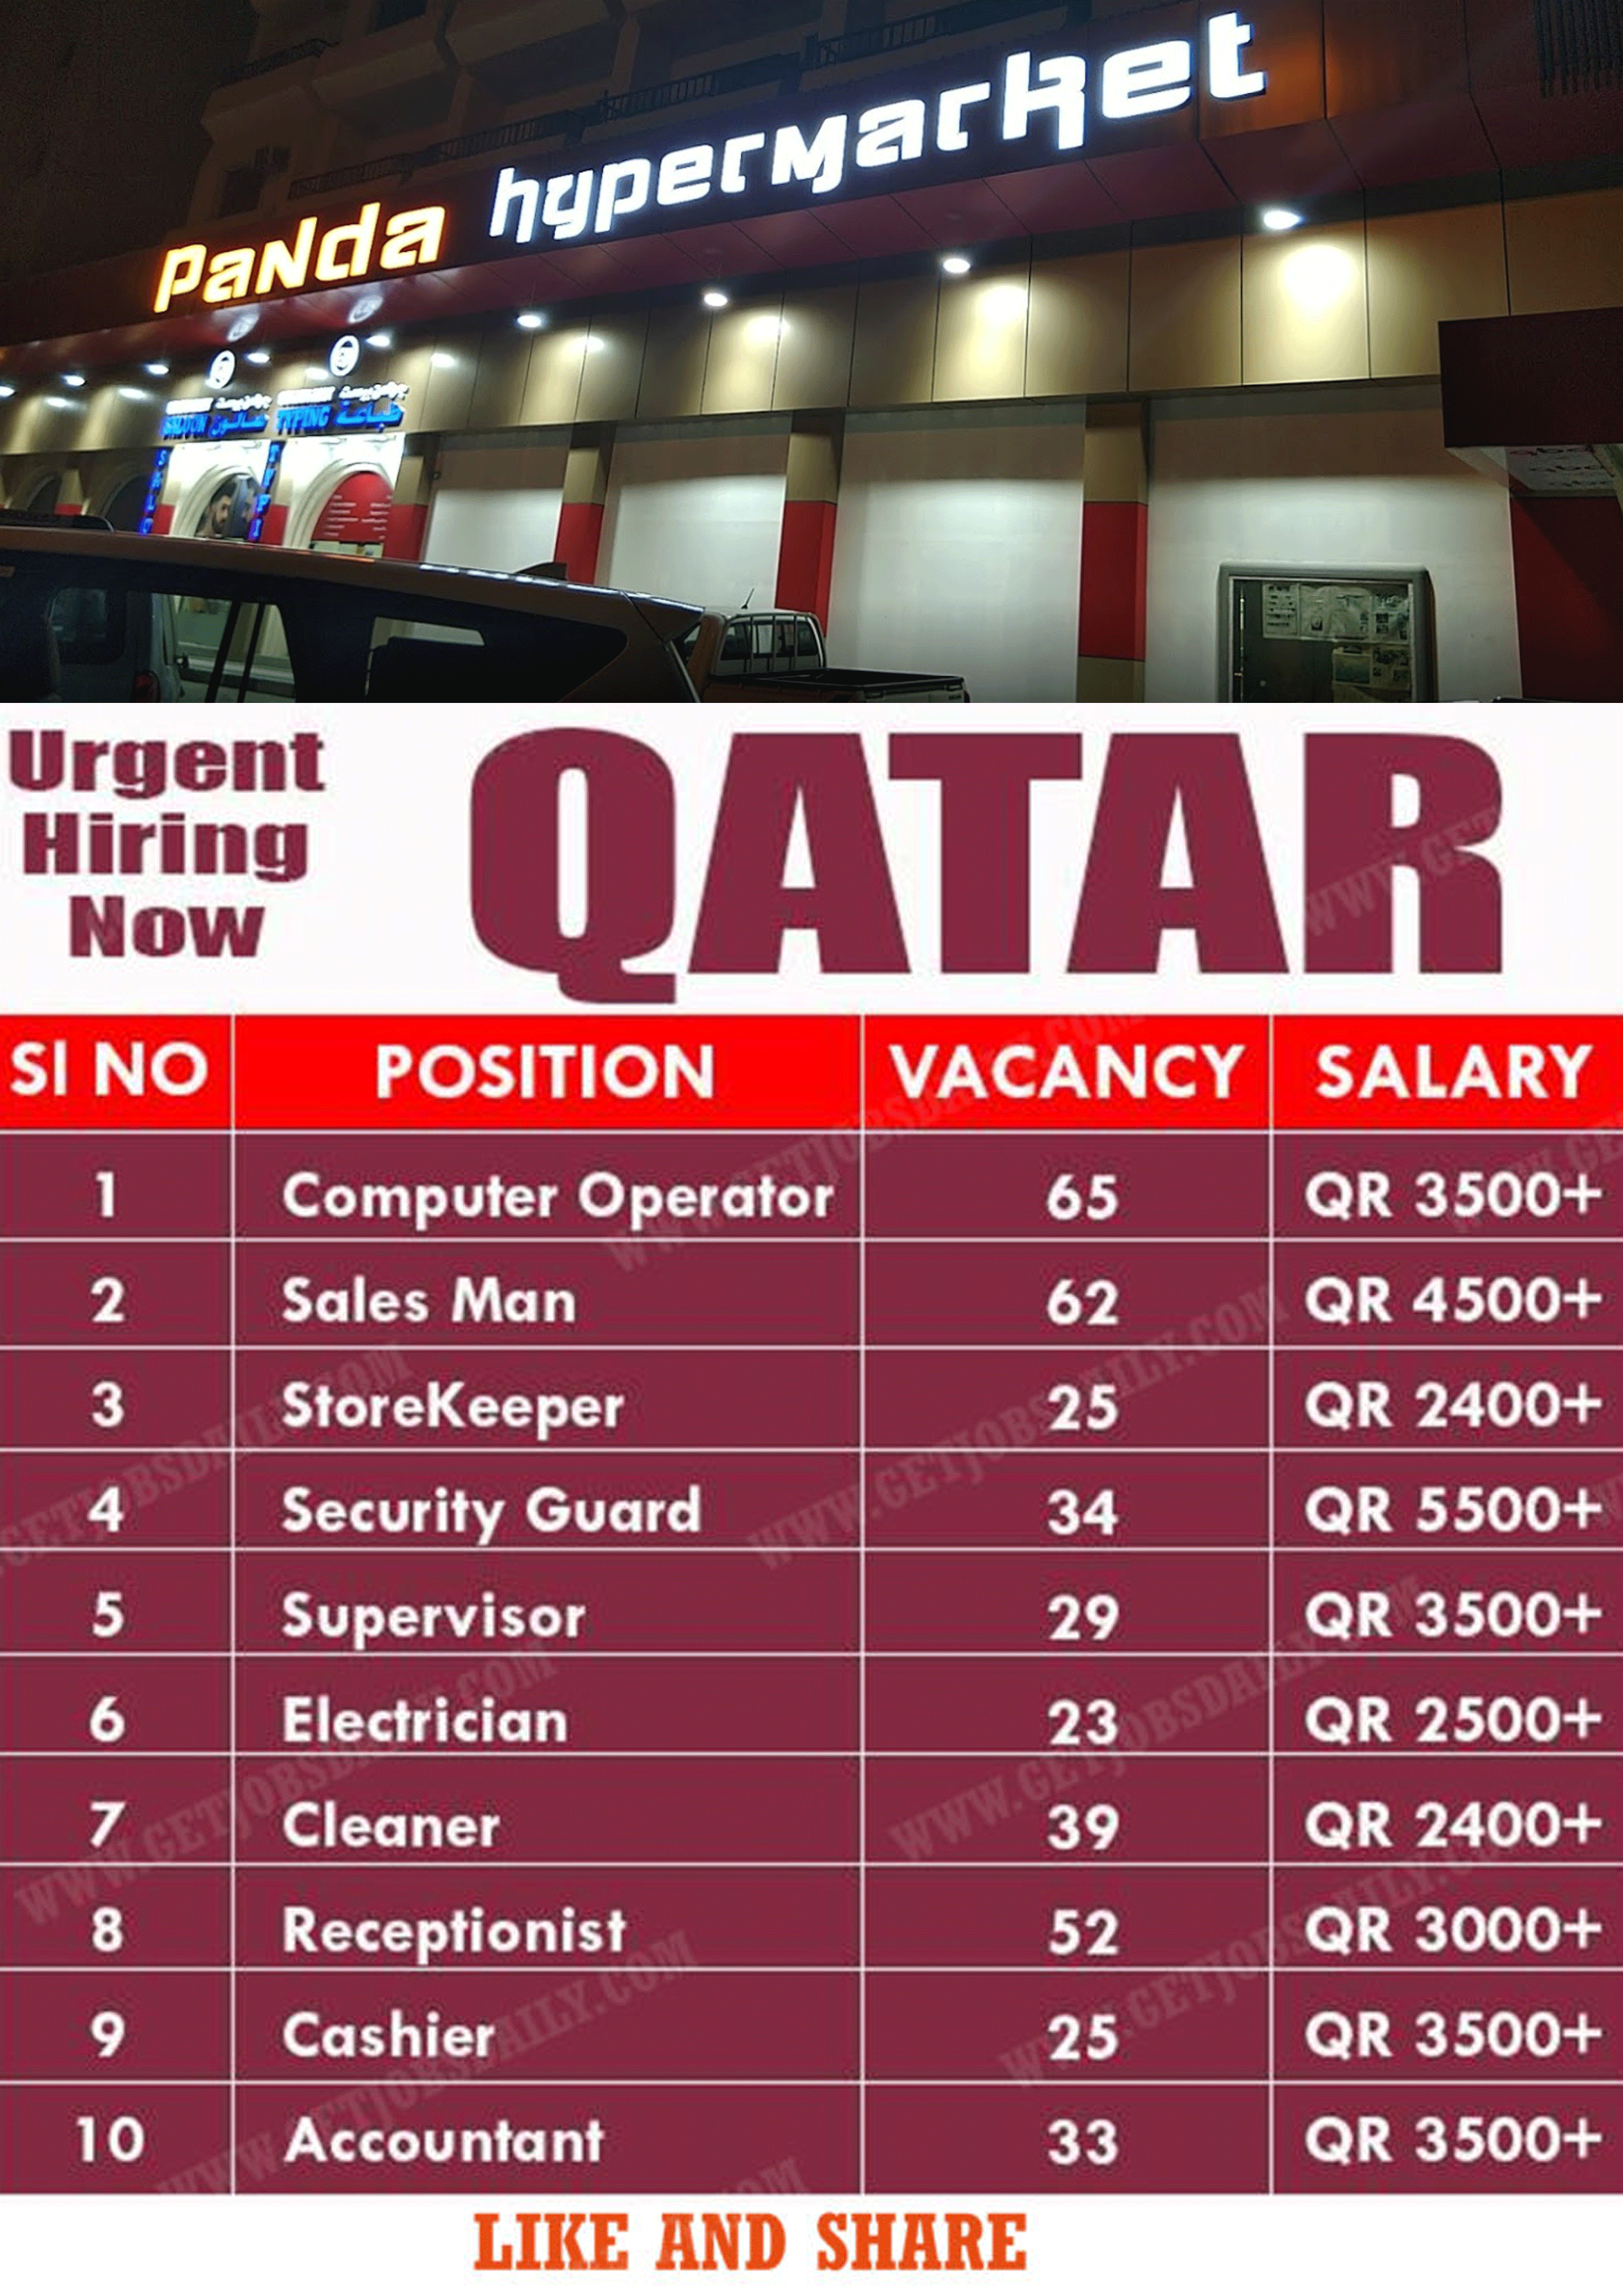 Job Vacancy In Panda Hypermarket Qatar